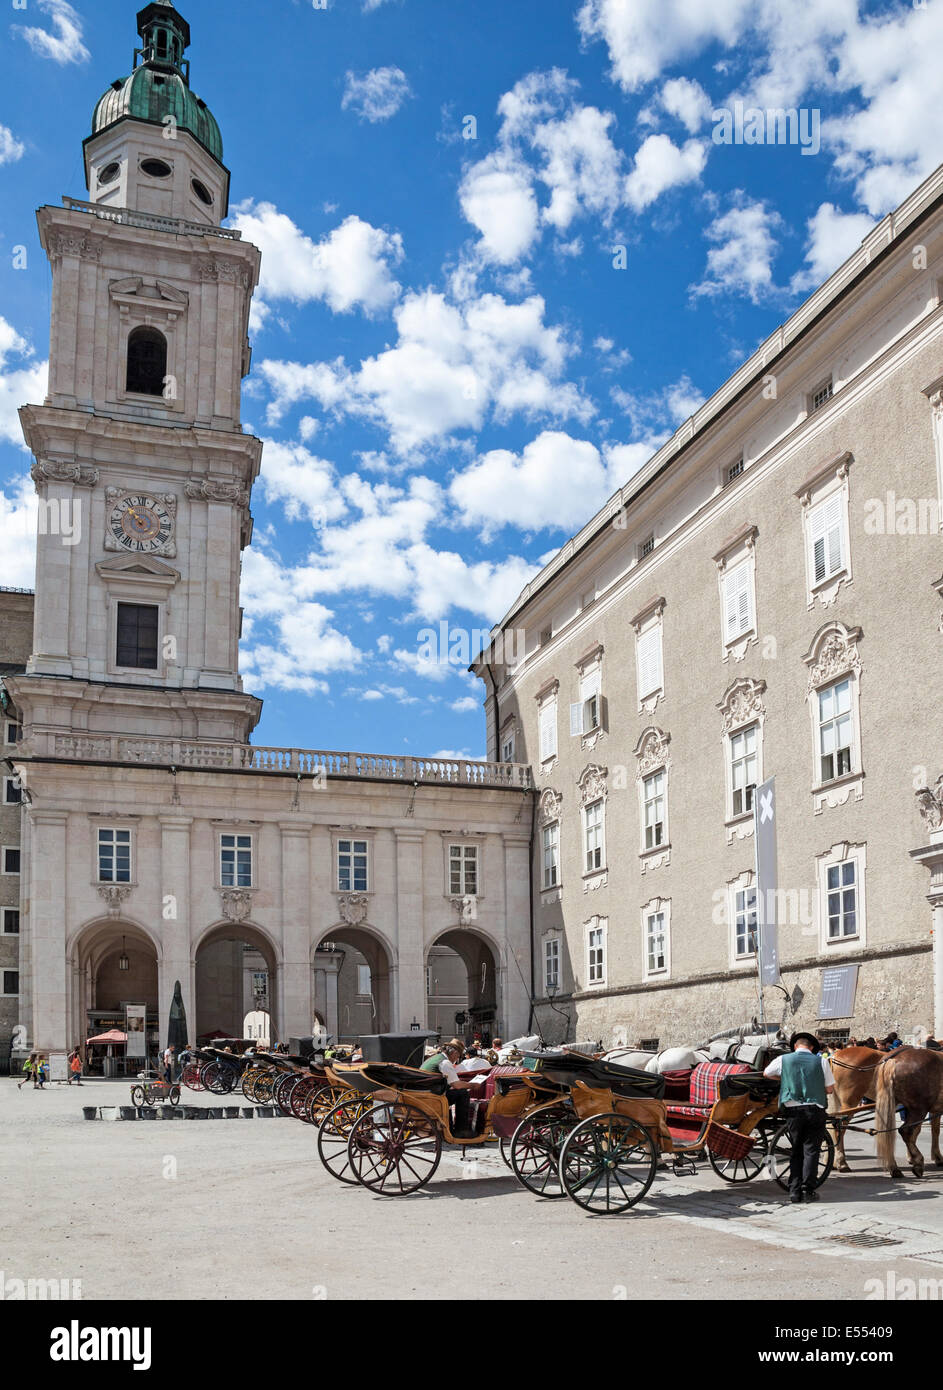 fiacres, a horse-drawn four-wheeled carriage, and their drivers waiting to be hired  Residenzplatz Salzburg Austria Europe Stock Photo